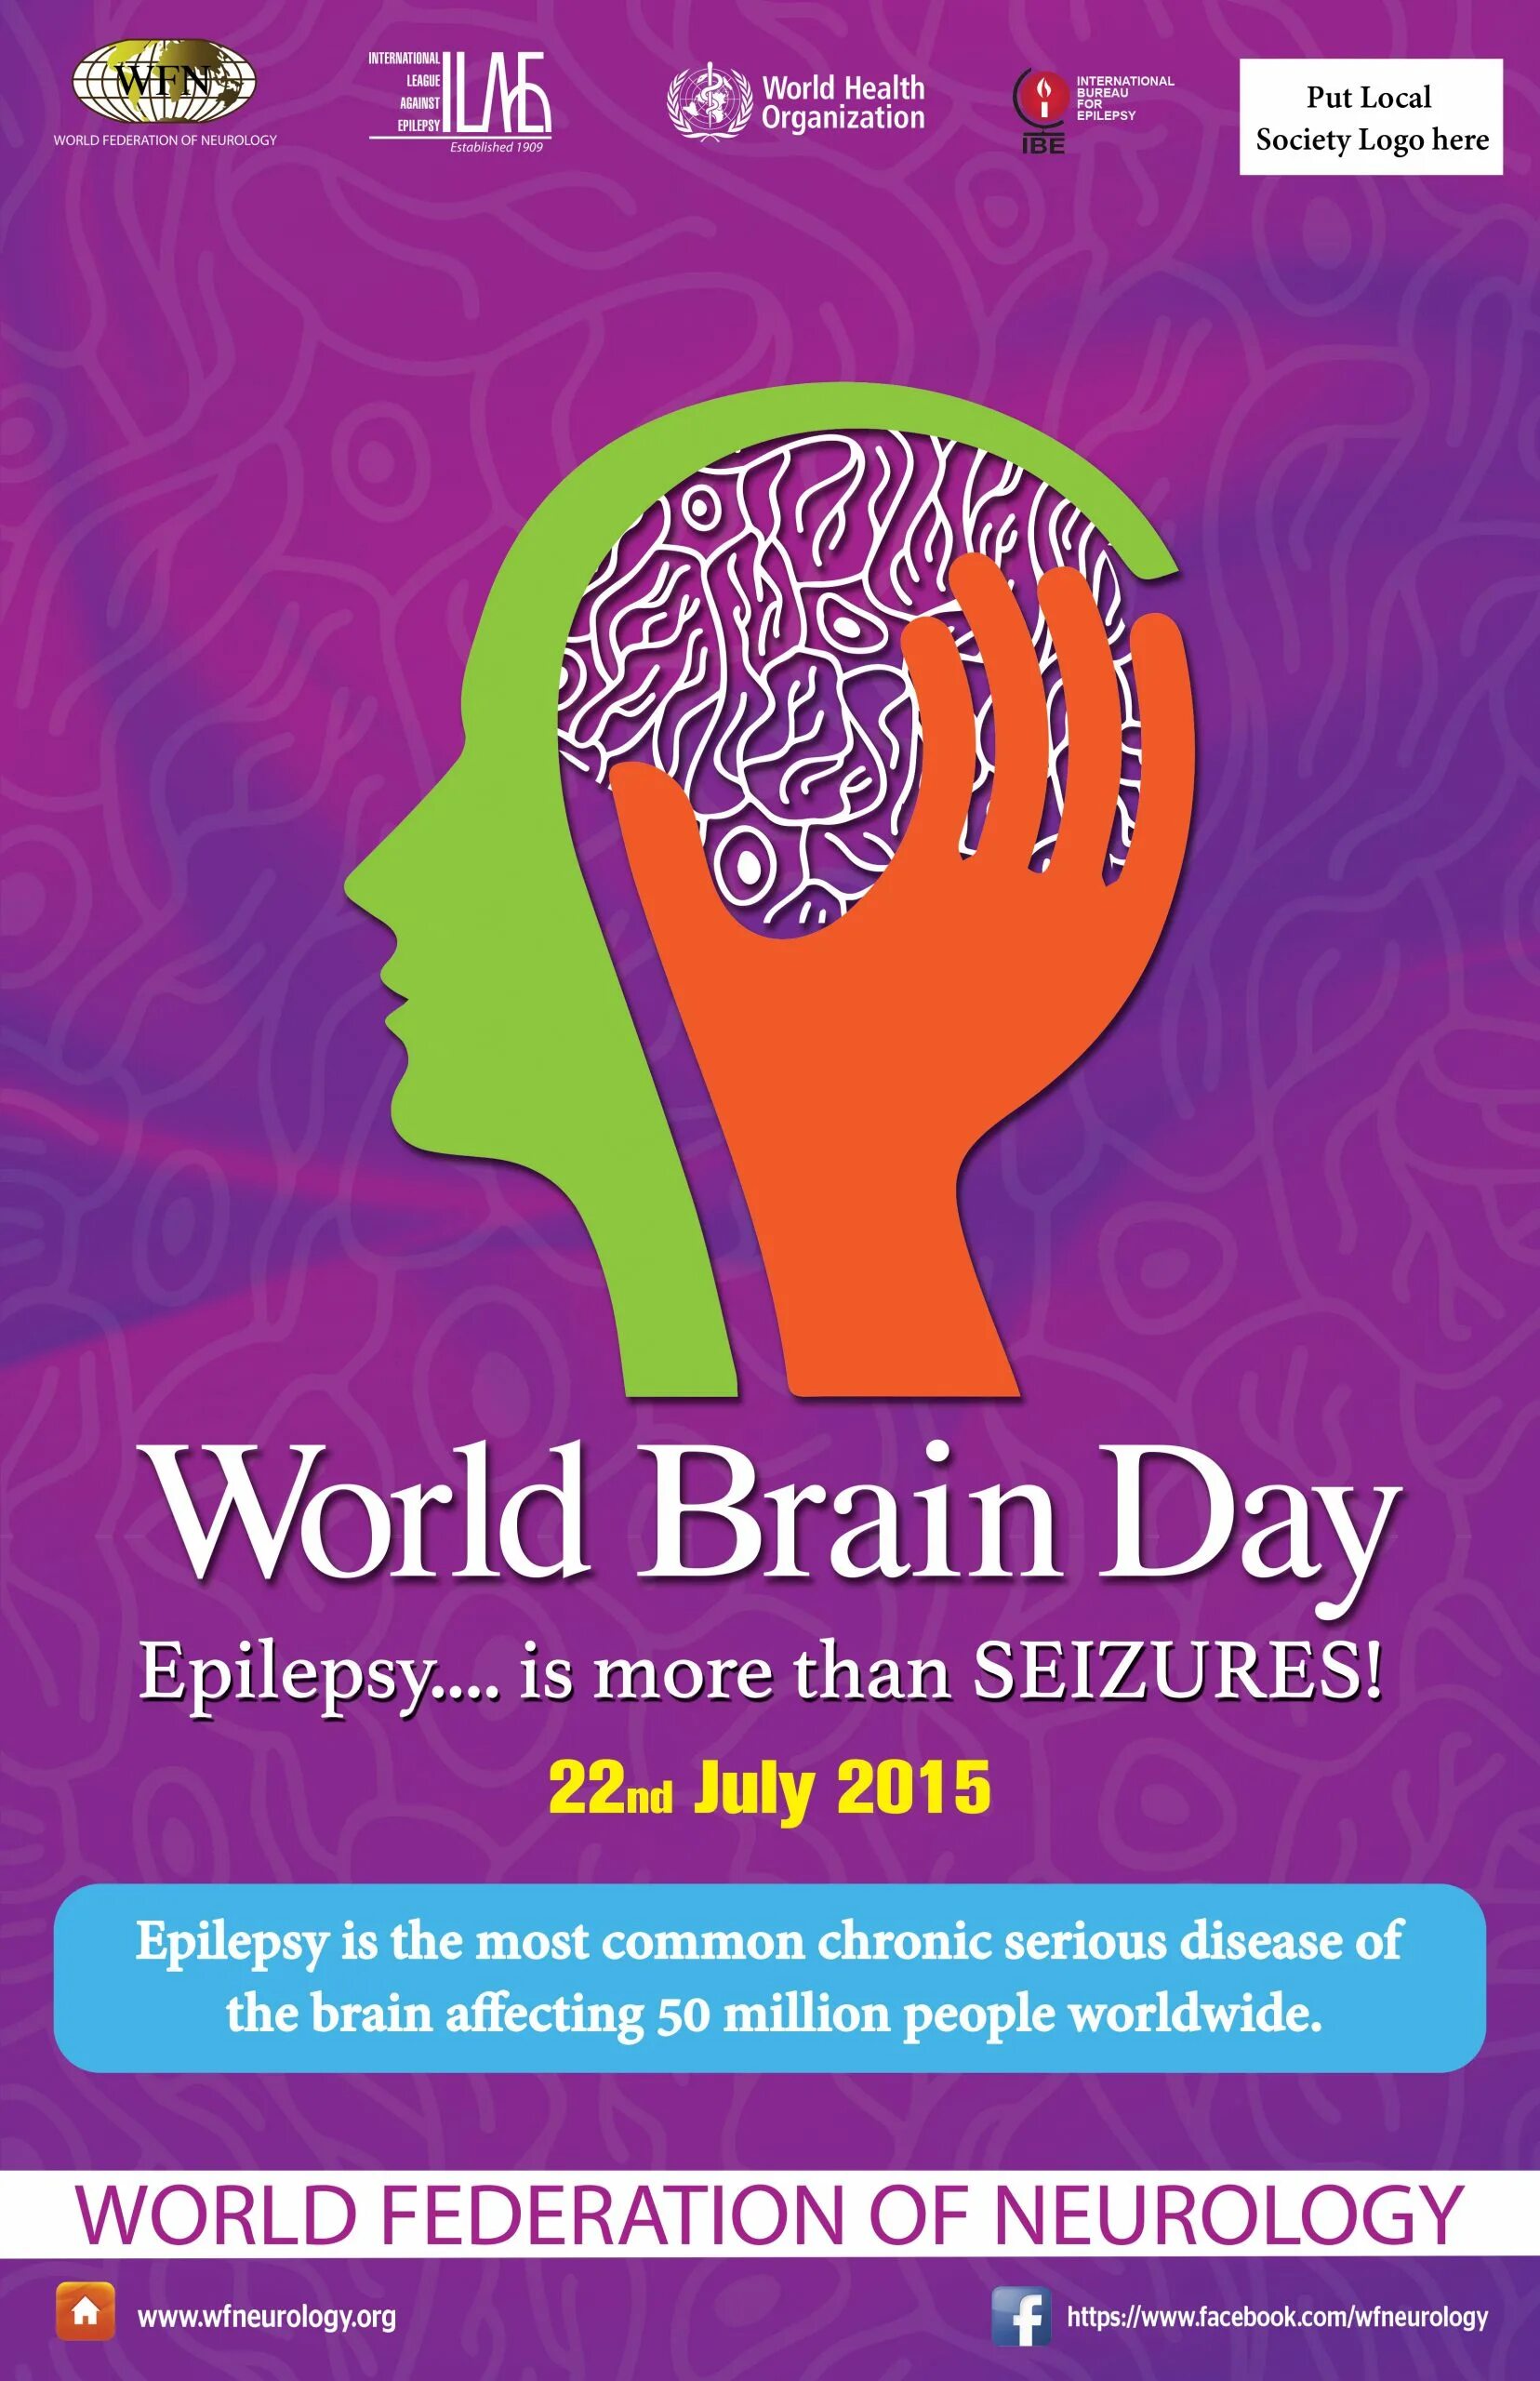 Brains day. World Brain Day. Brain Day. The World for Brain. The International Bureau for Epilepsy (IBE).